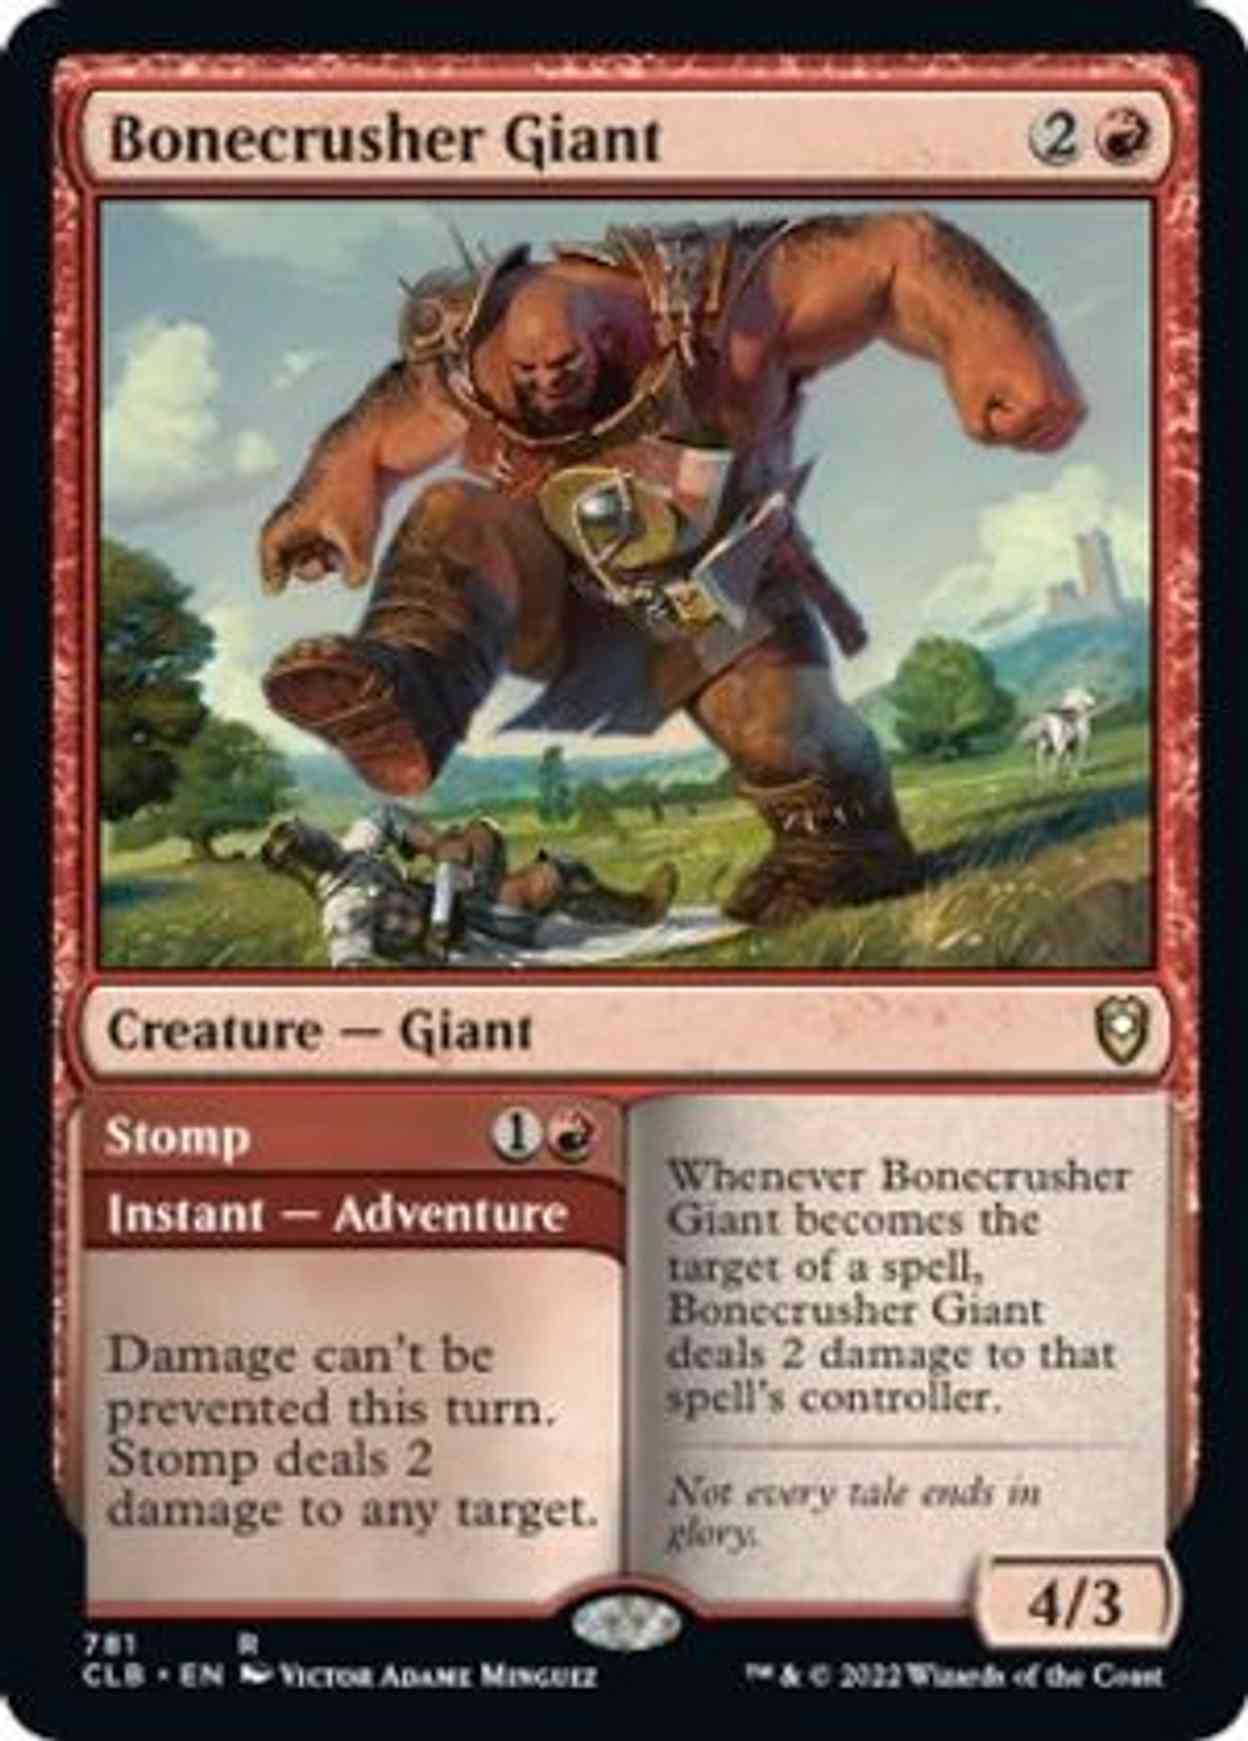 Bonecrusher Giant magic card front